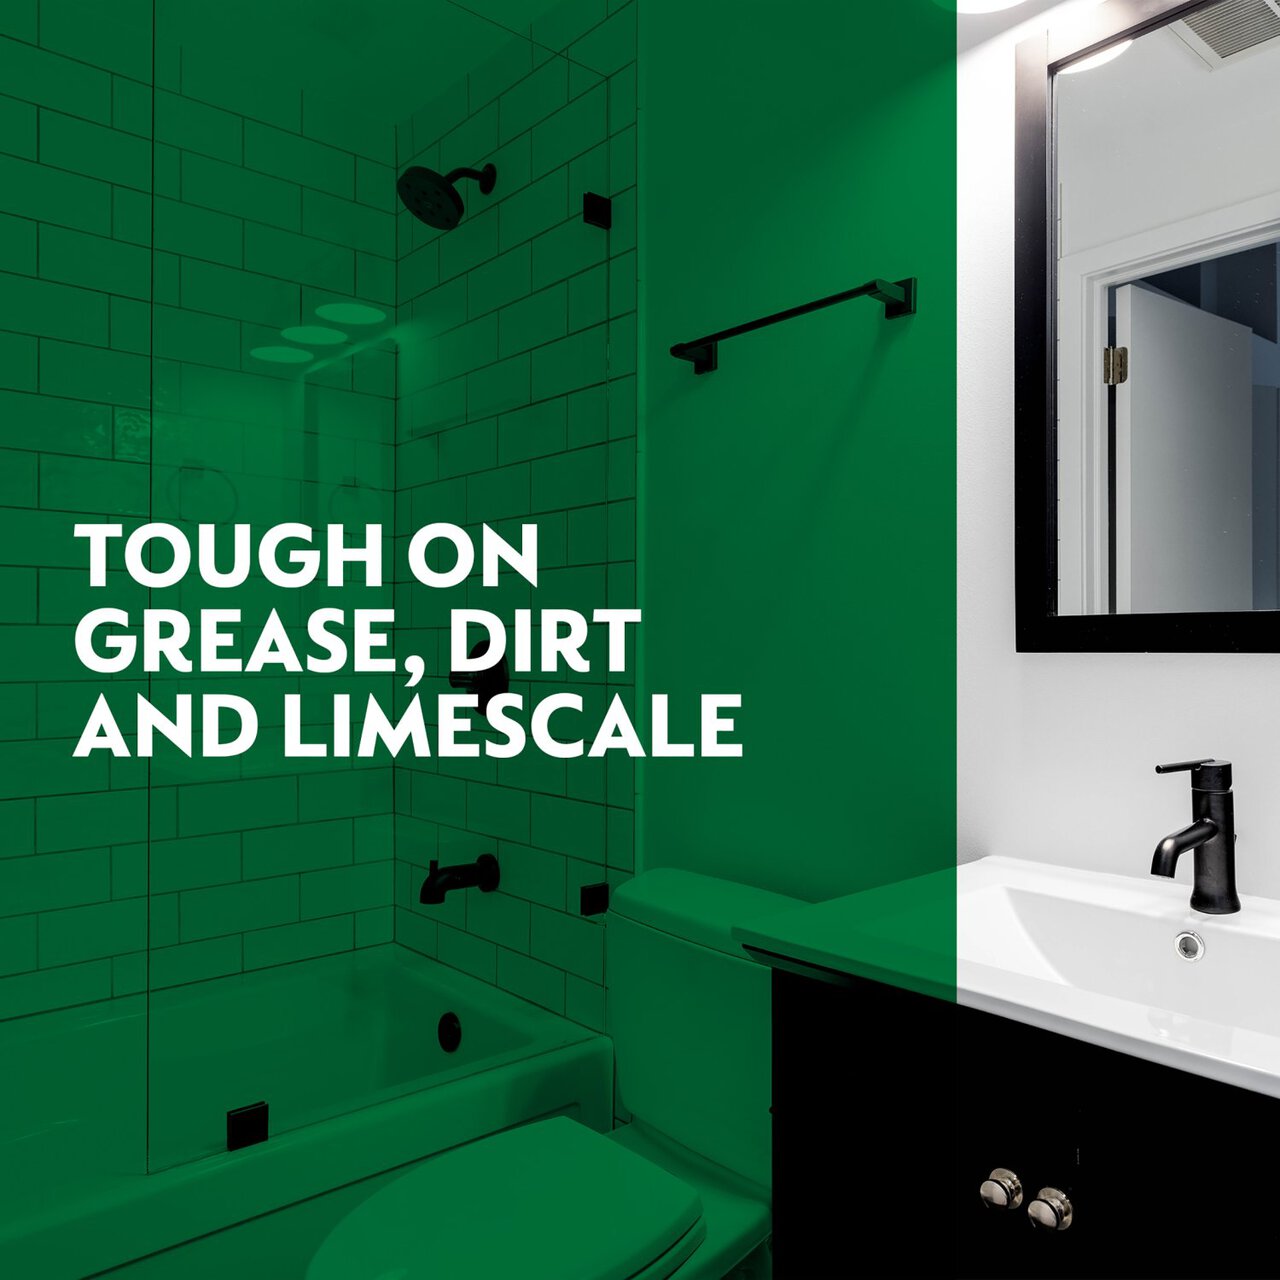 Dettol Antibacterial Limescale Bathroom Cleaner Spray 750ml